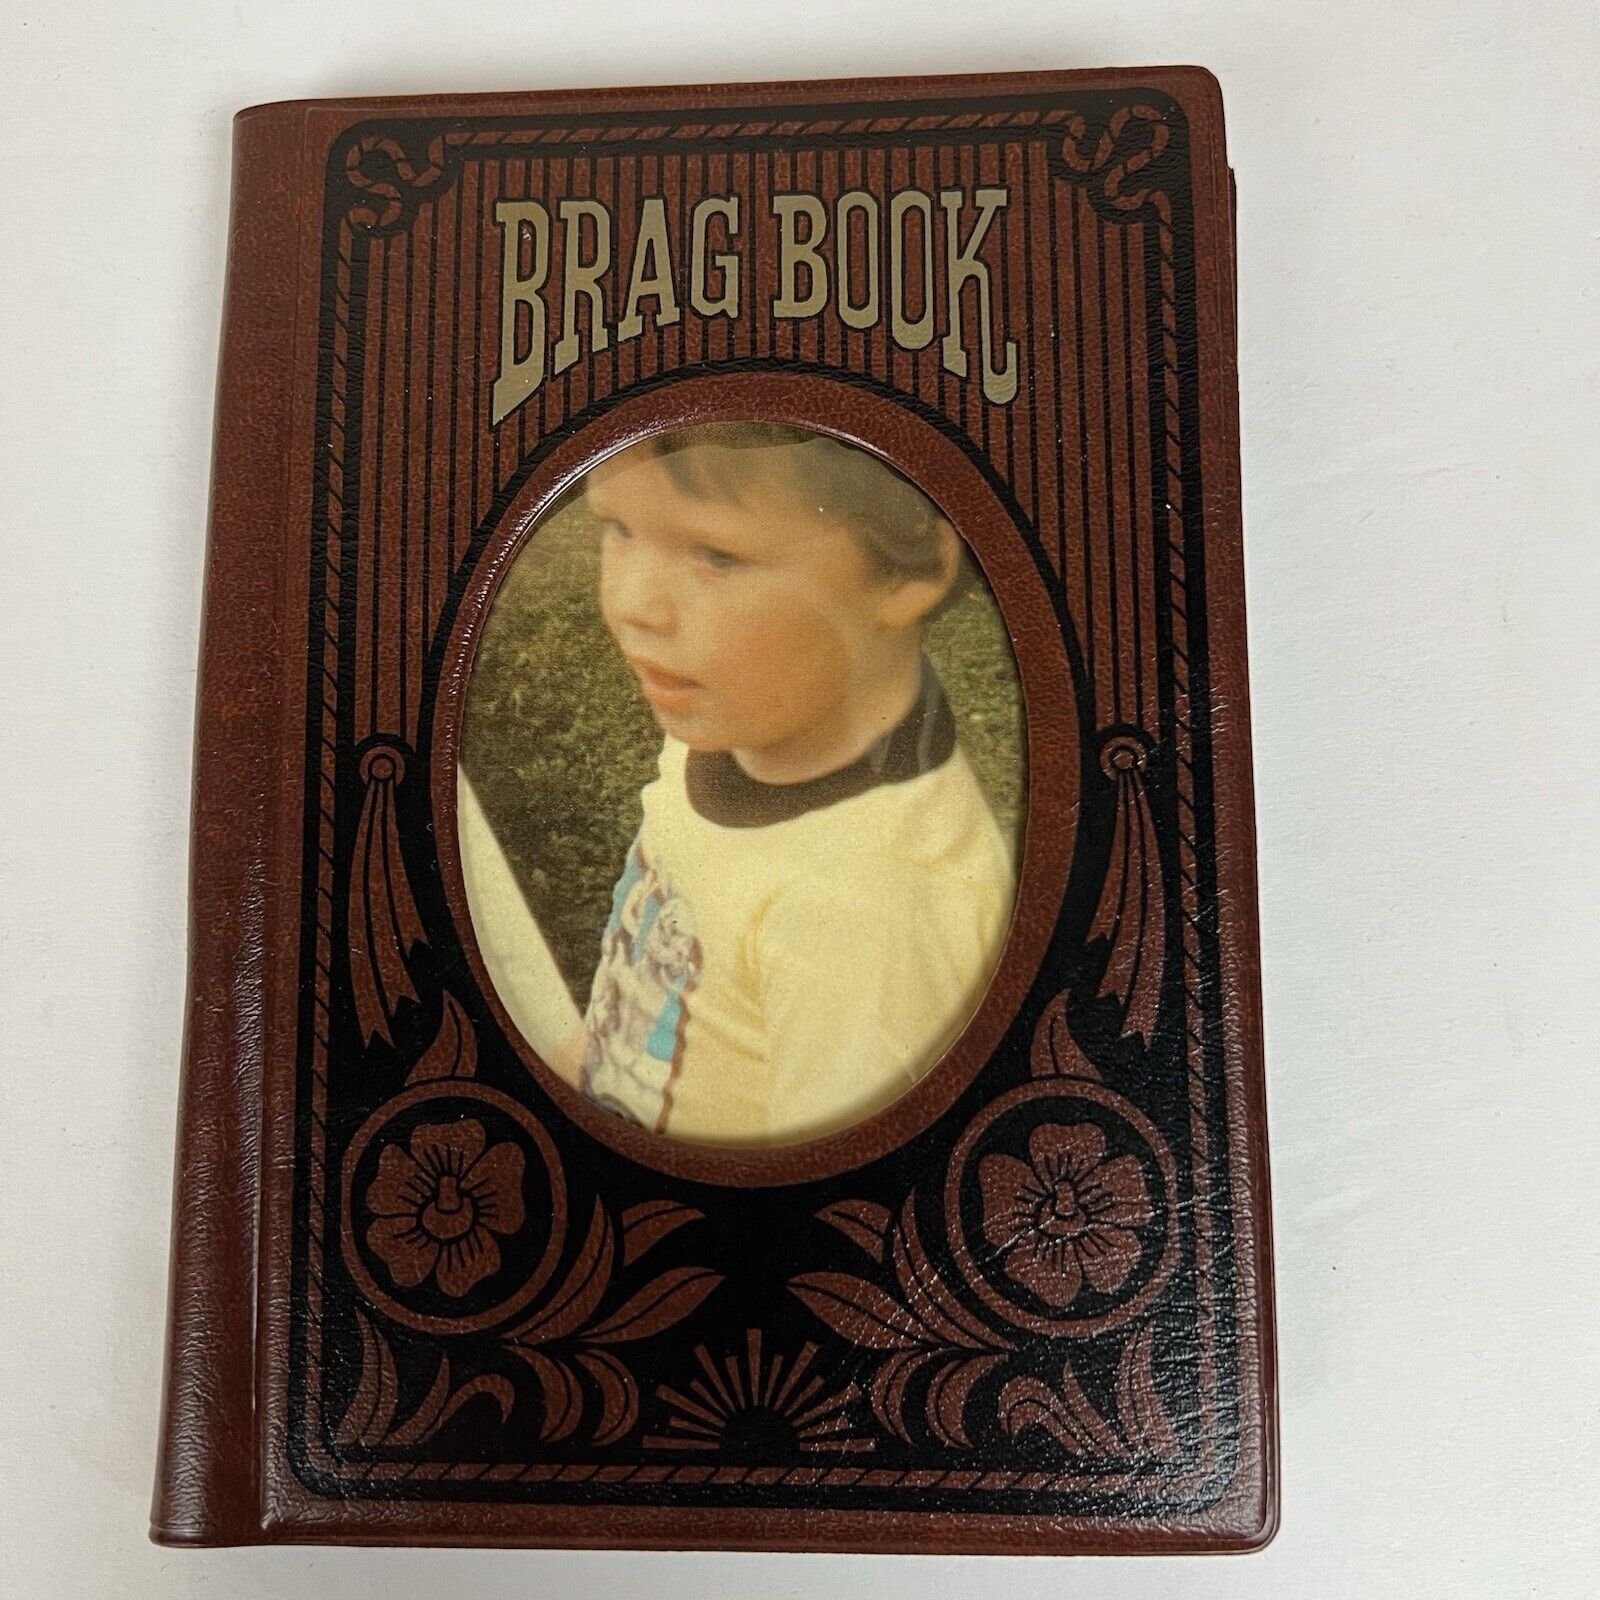 Vintage 1980s Photo Album Brag Book for 3.5 x 5 inch photos